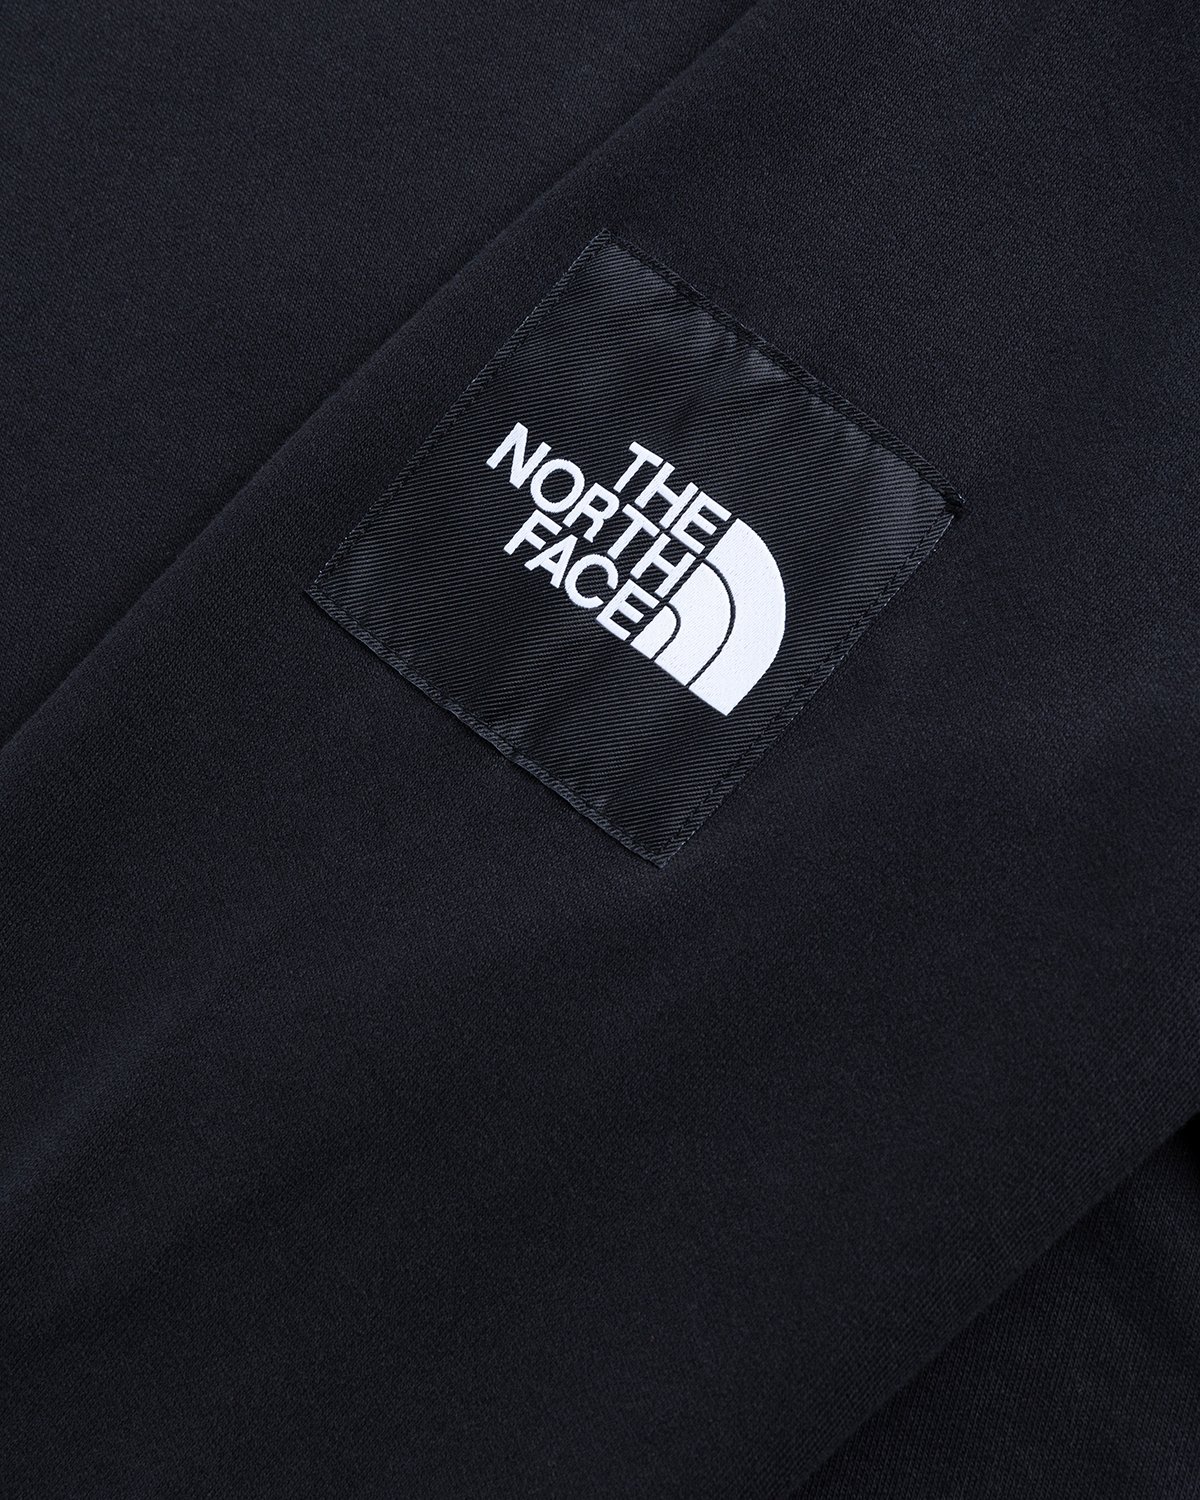 The North Face - Longsleeve Black - Clothing - Black - Image 7